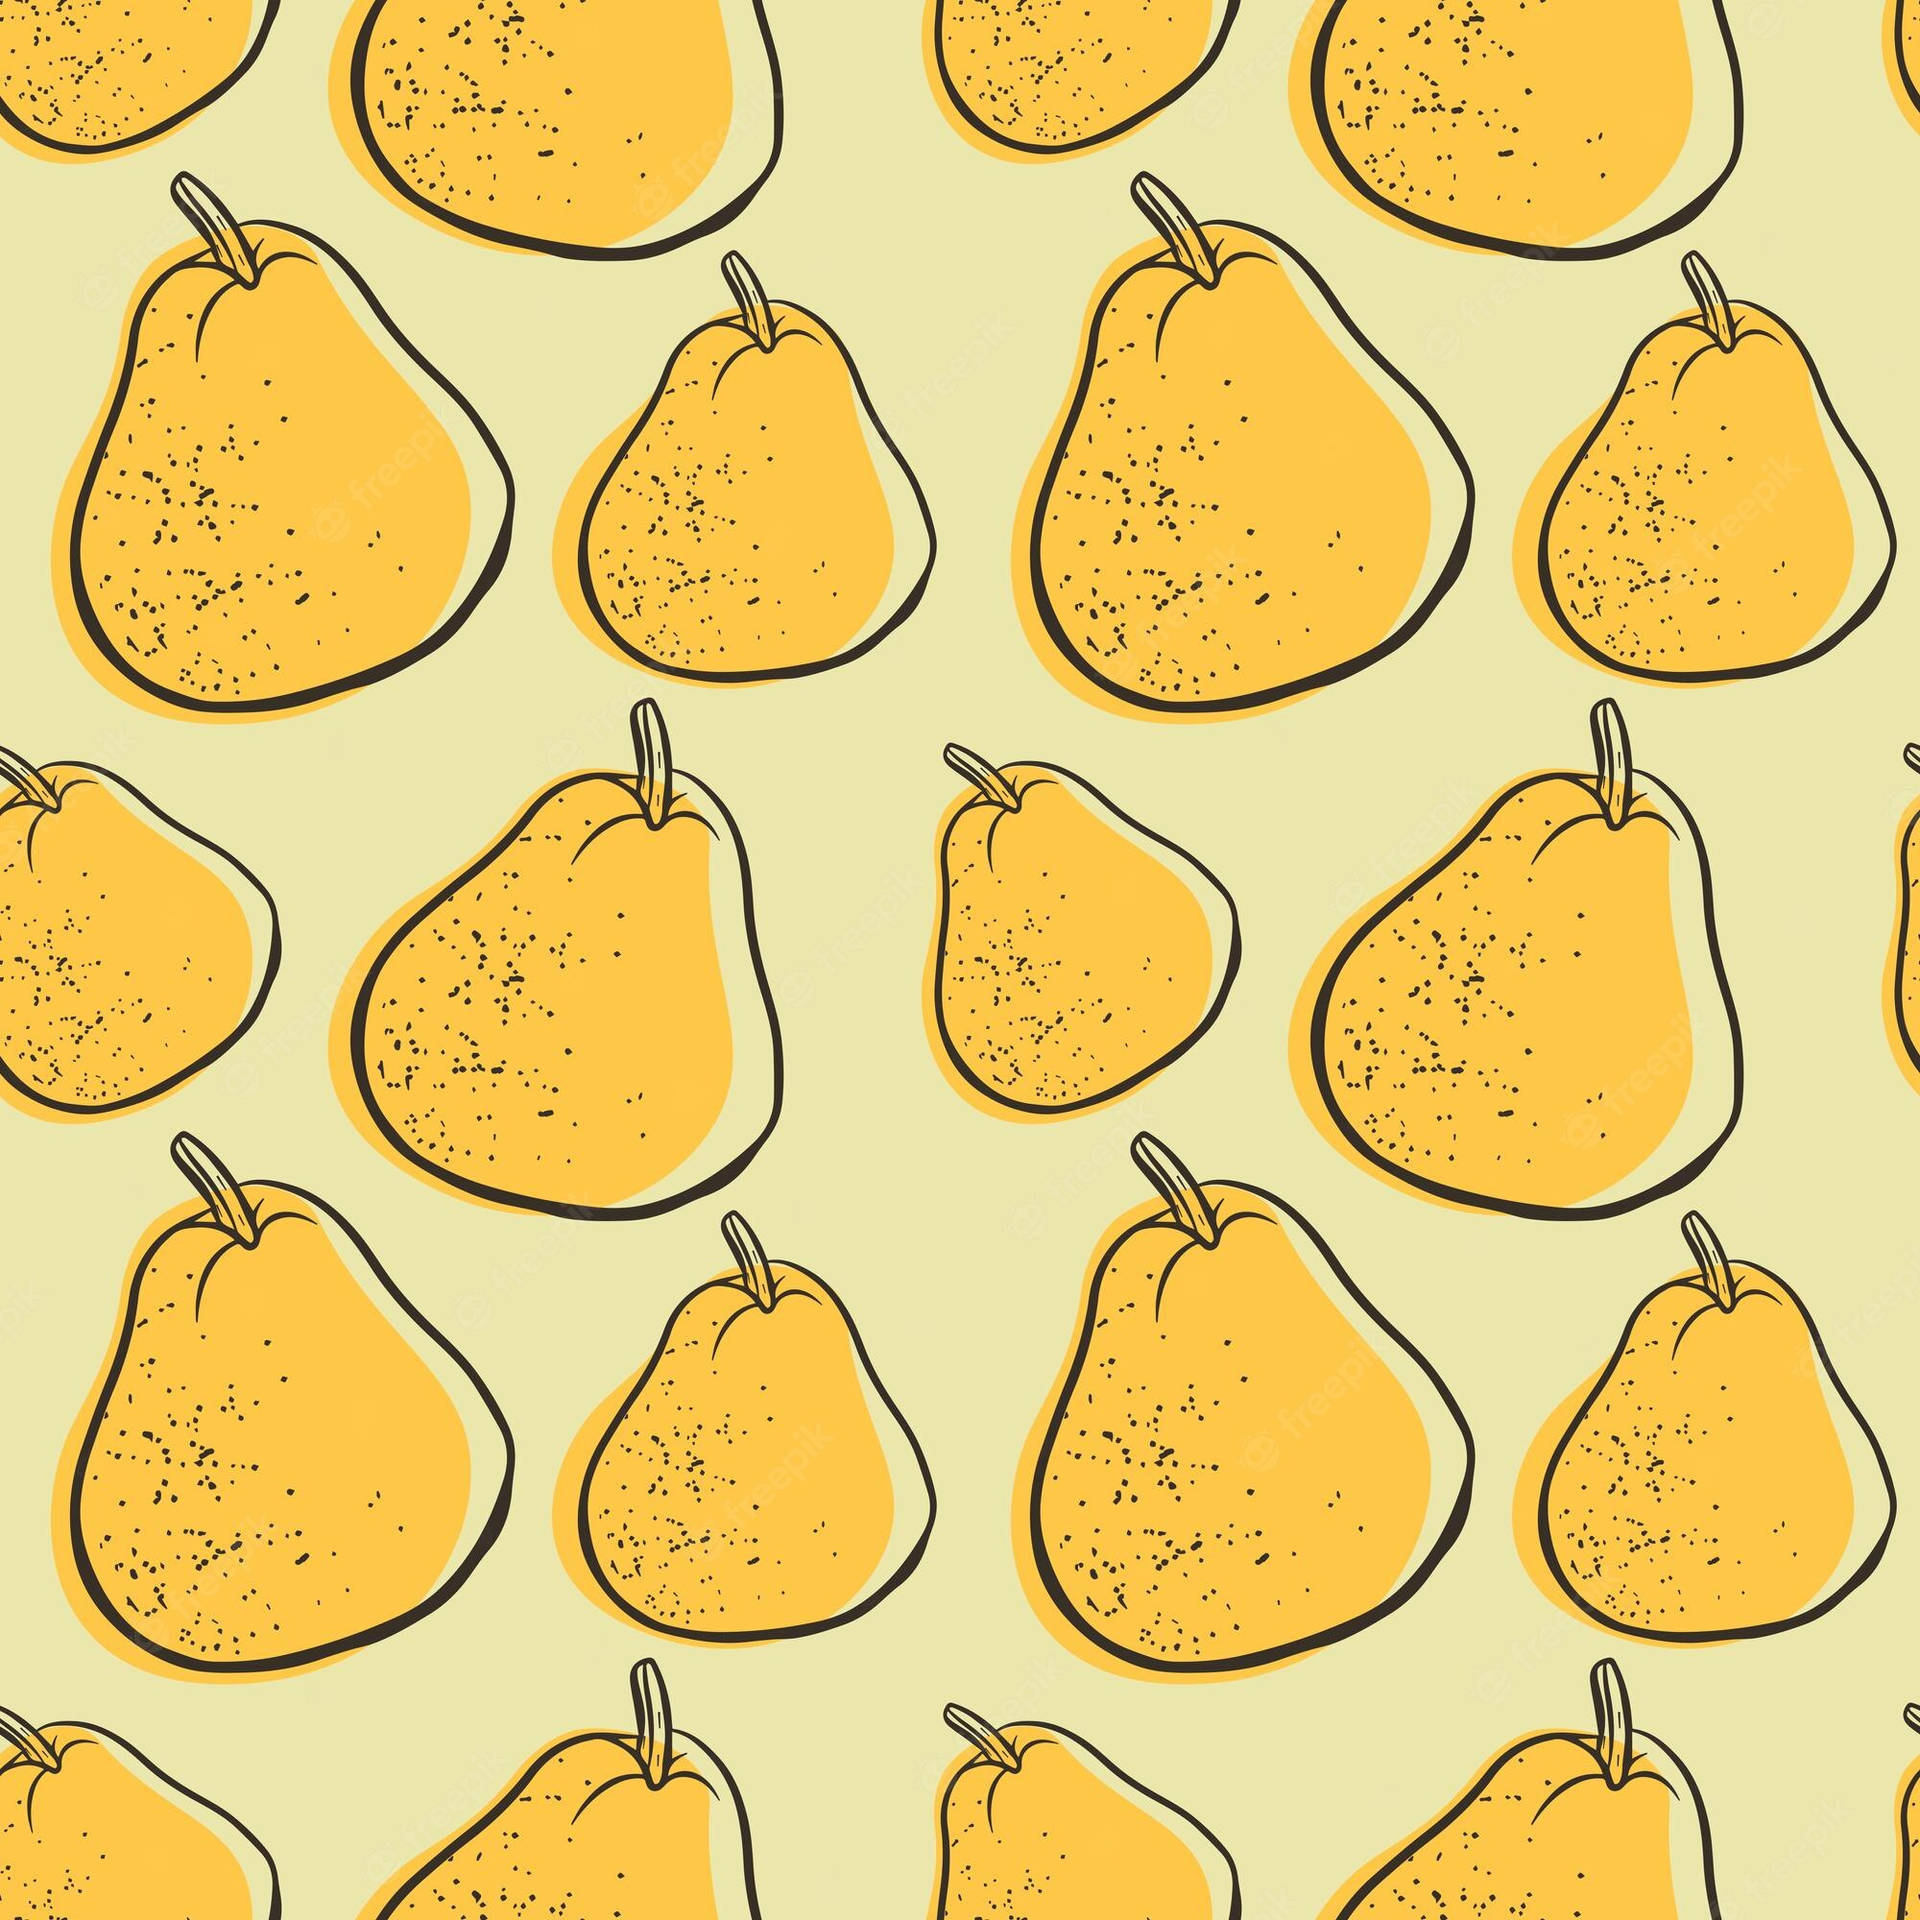 Orange Pear Fruits Poster Wallpaper